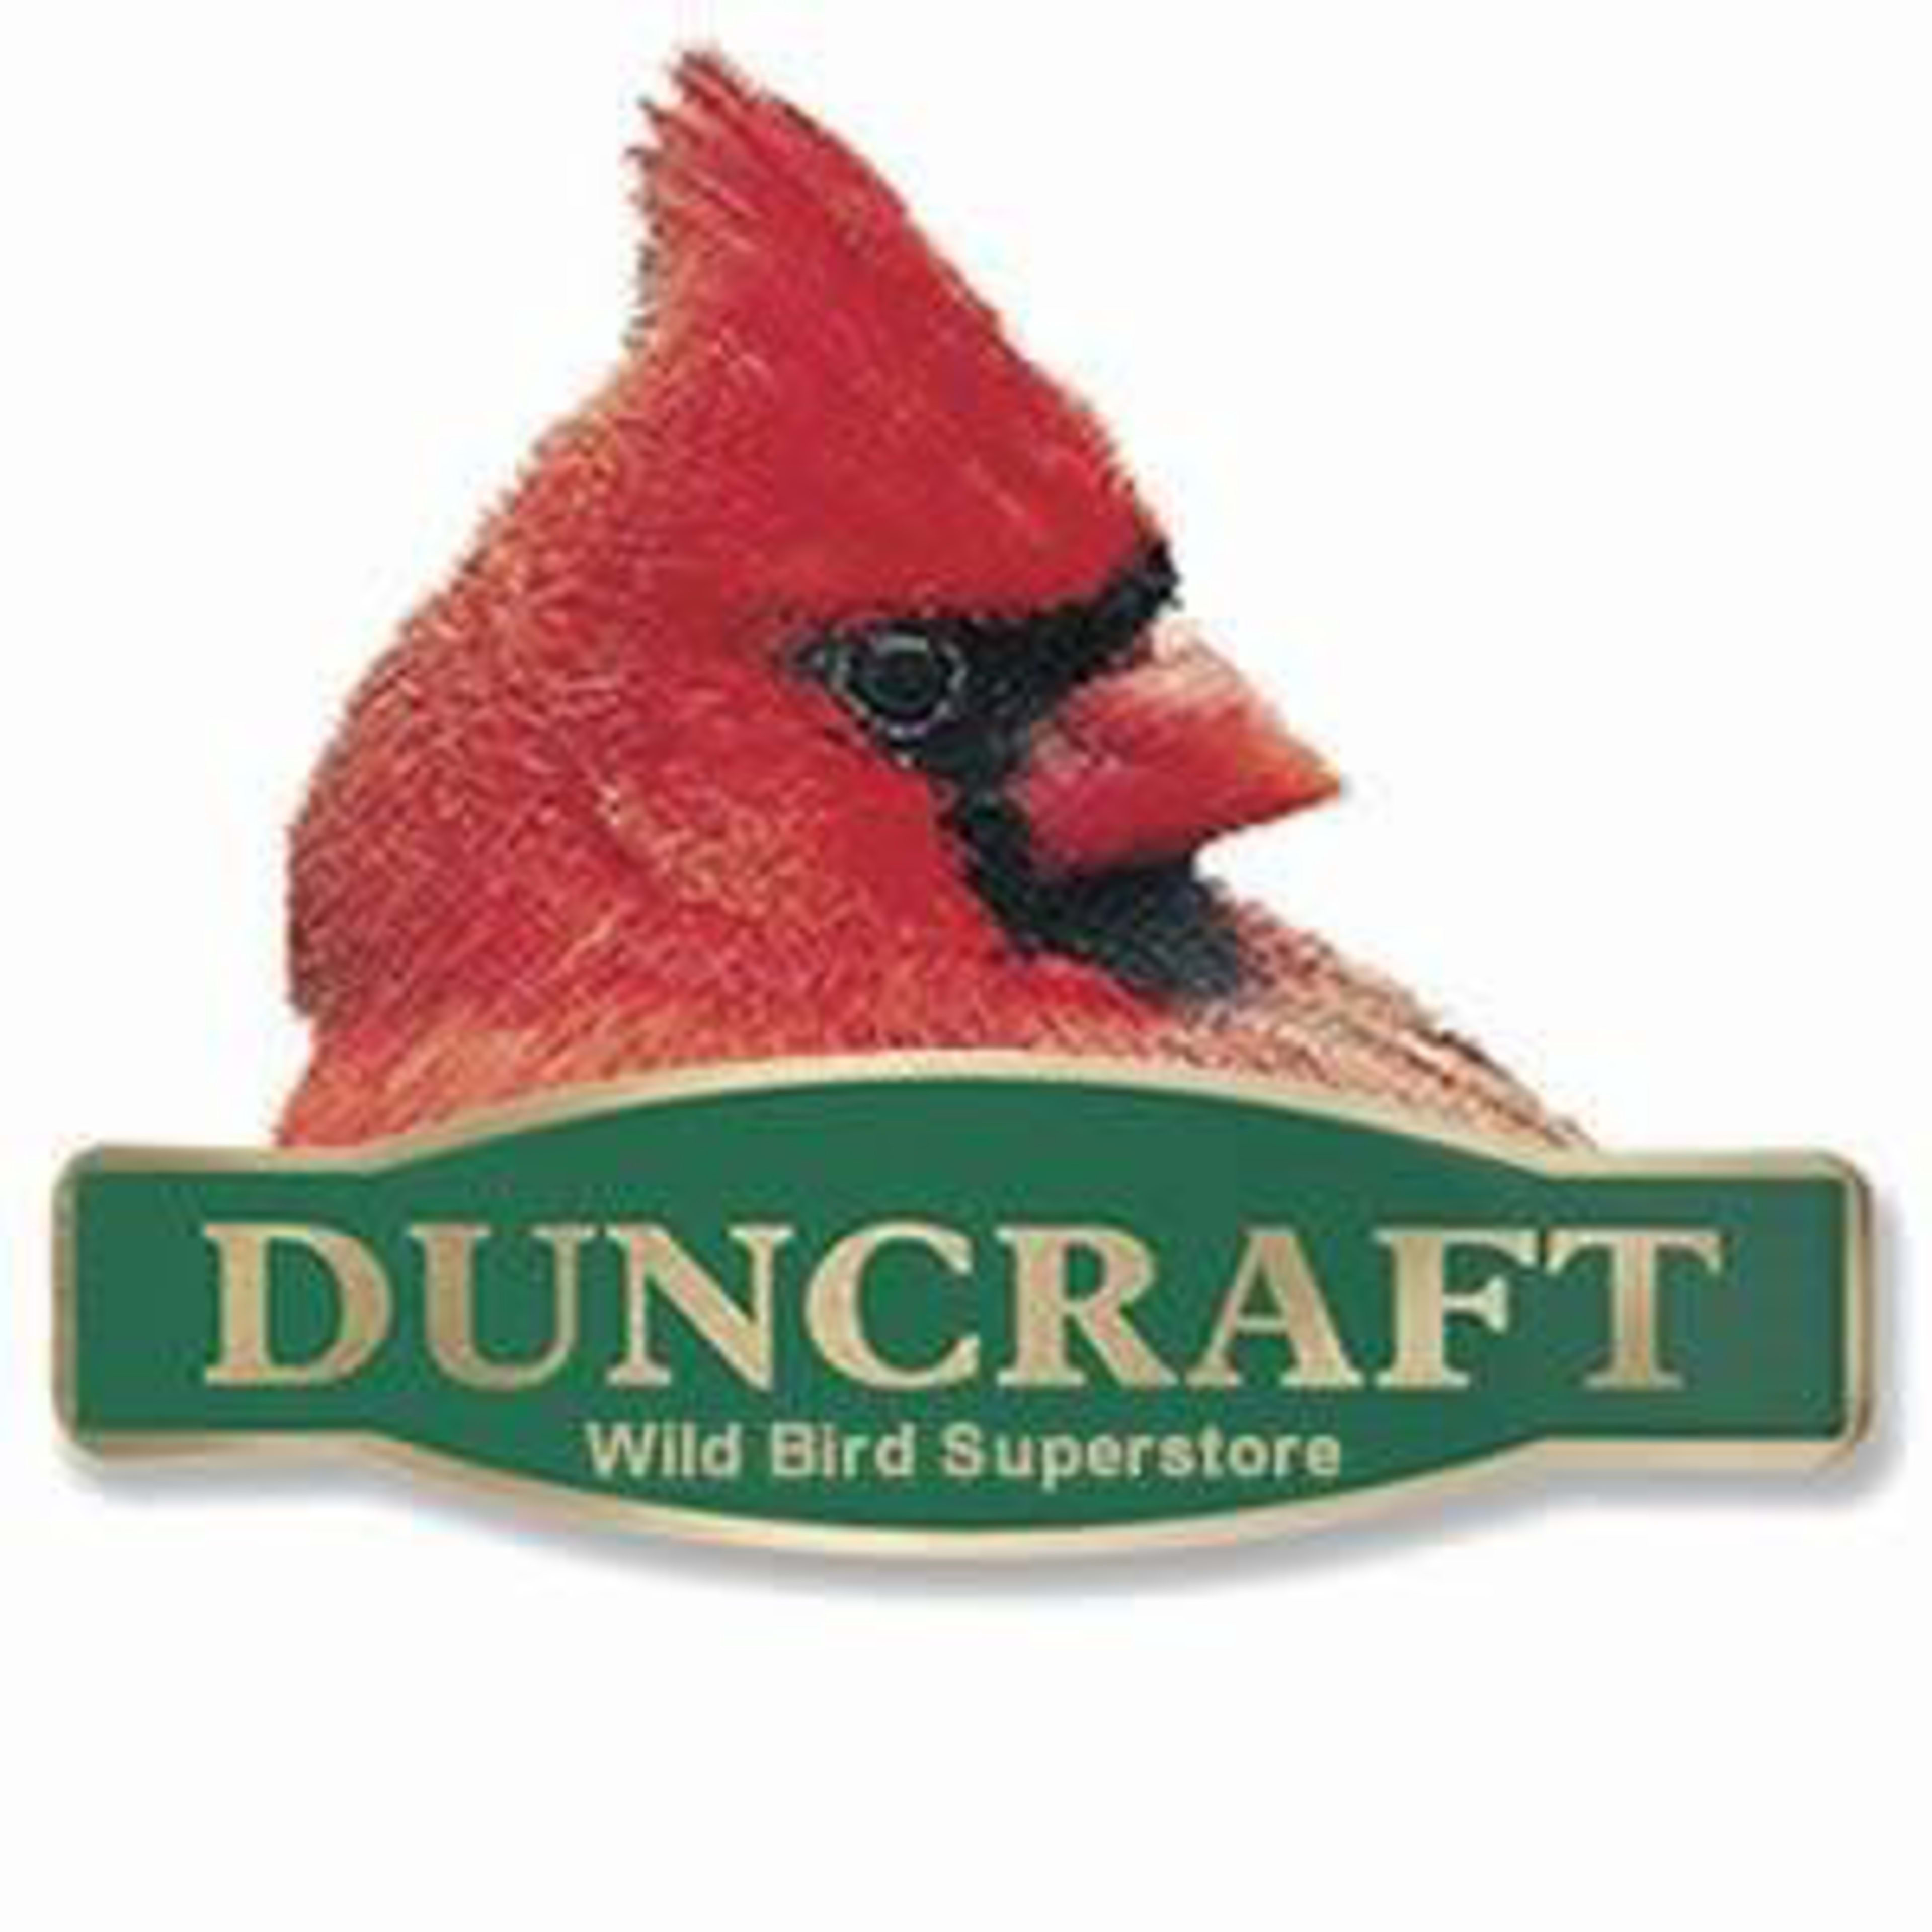 Duncraft Wild Bird SuperstoreCode